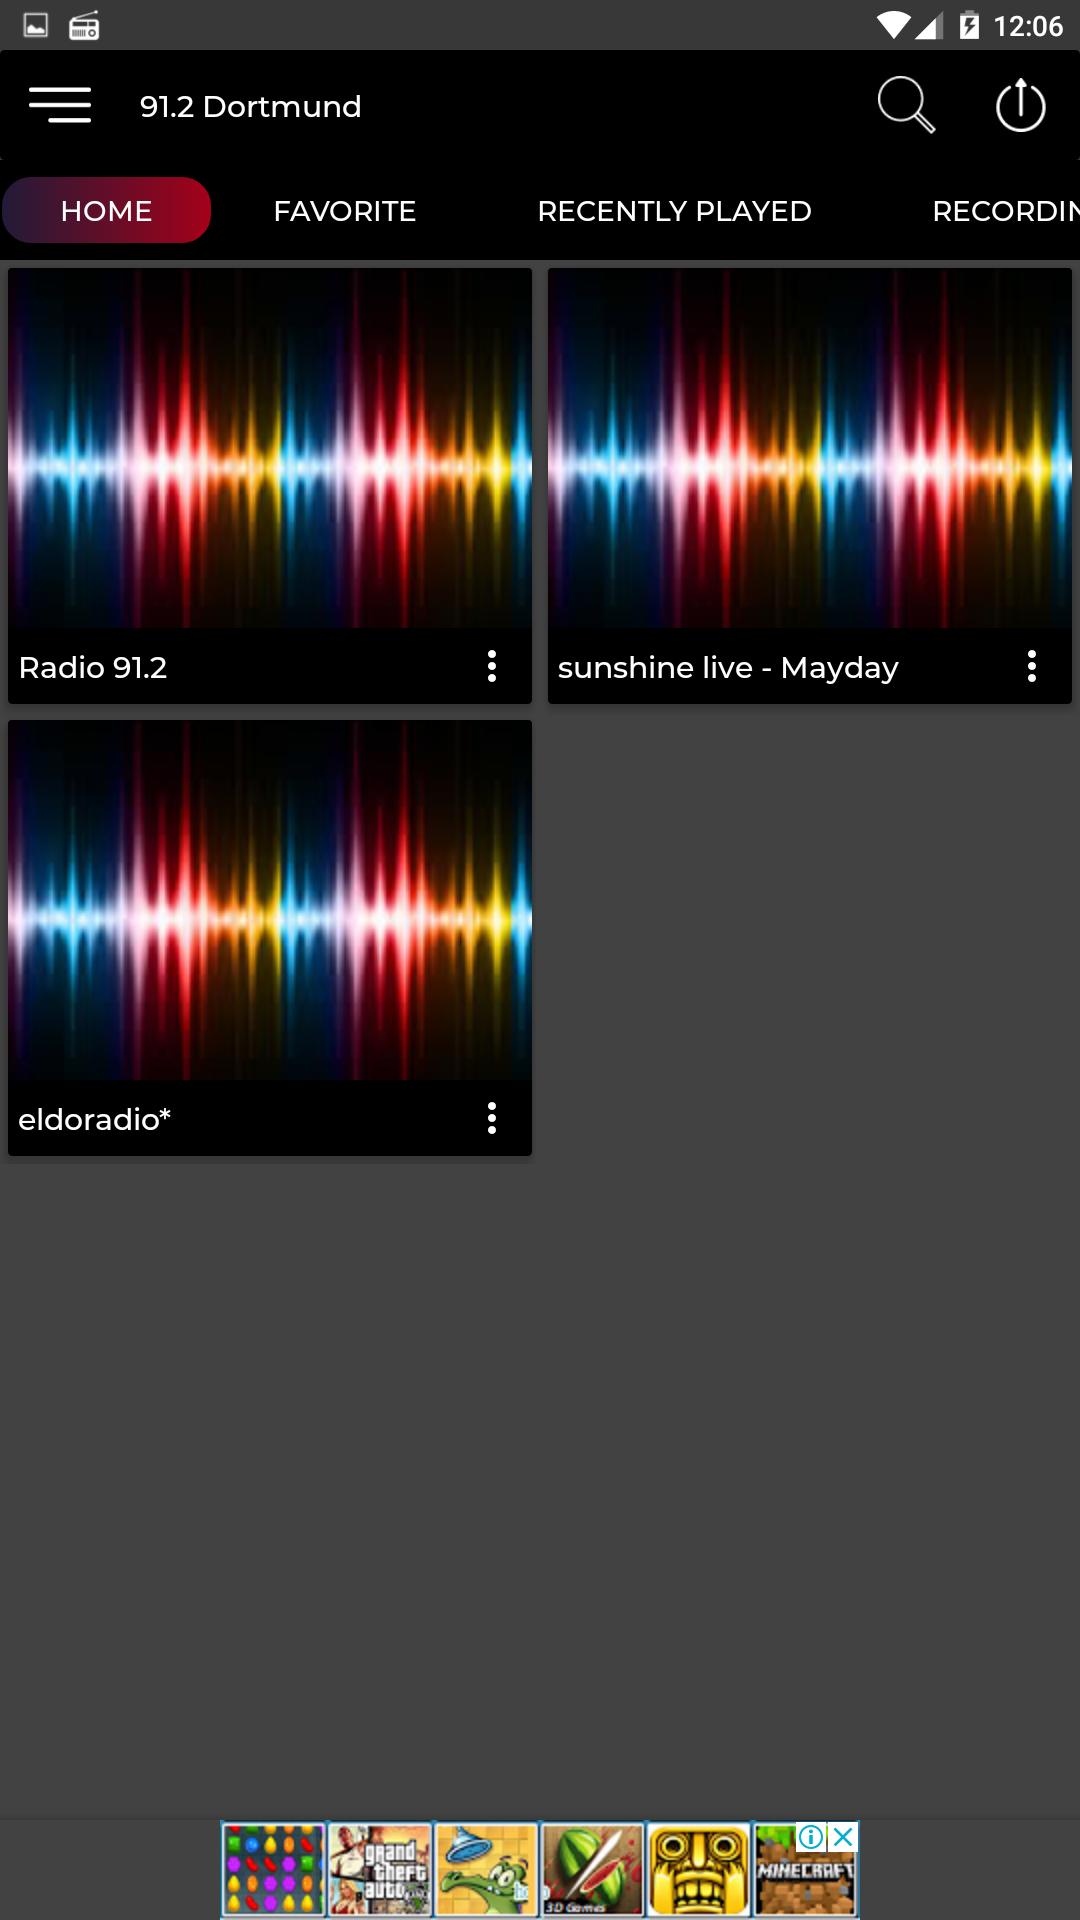 Radio 91.2 Dortmund Rekorder Audio for Android - APK Download